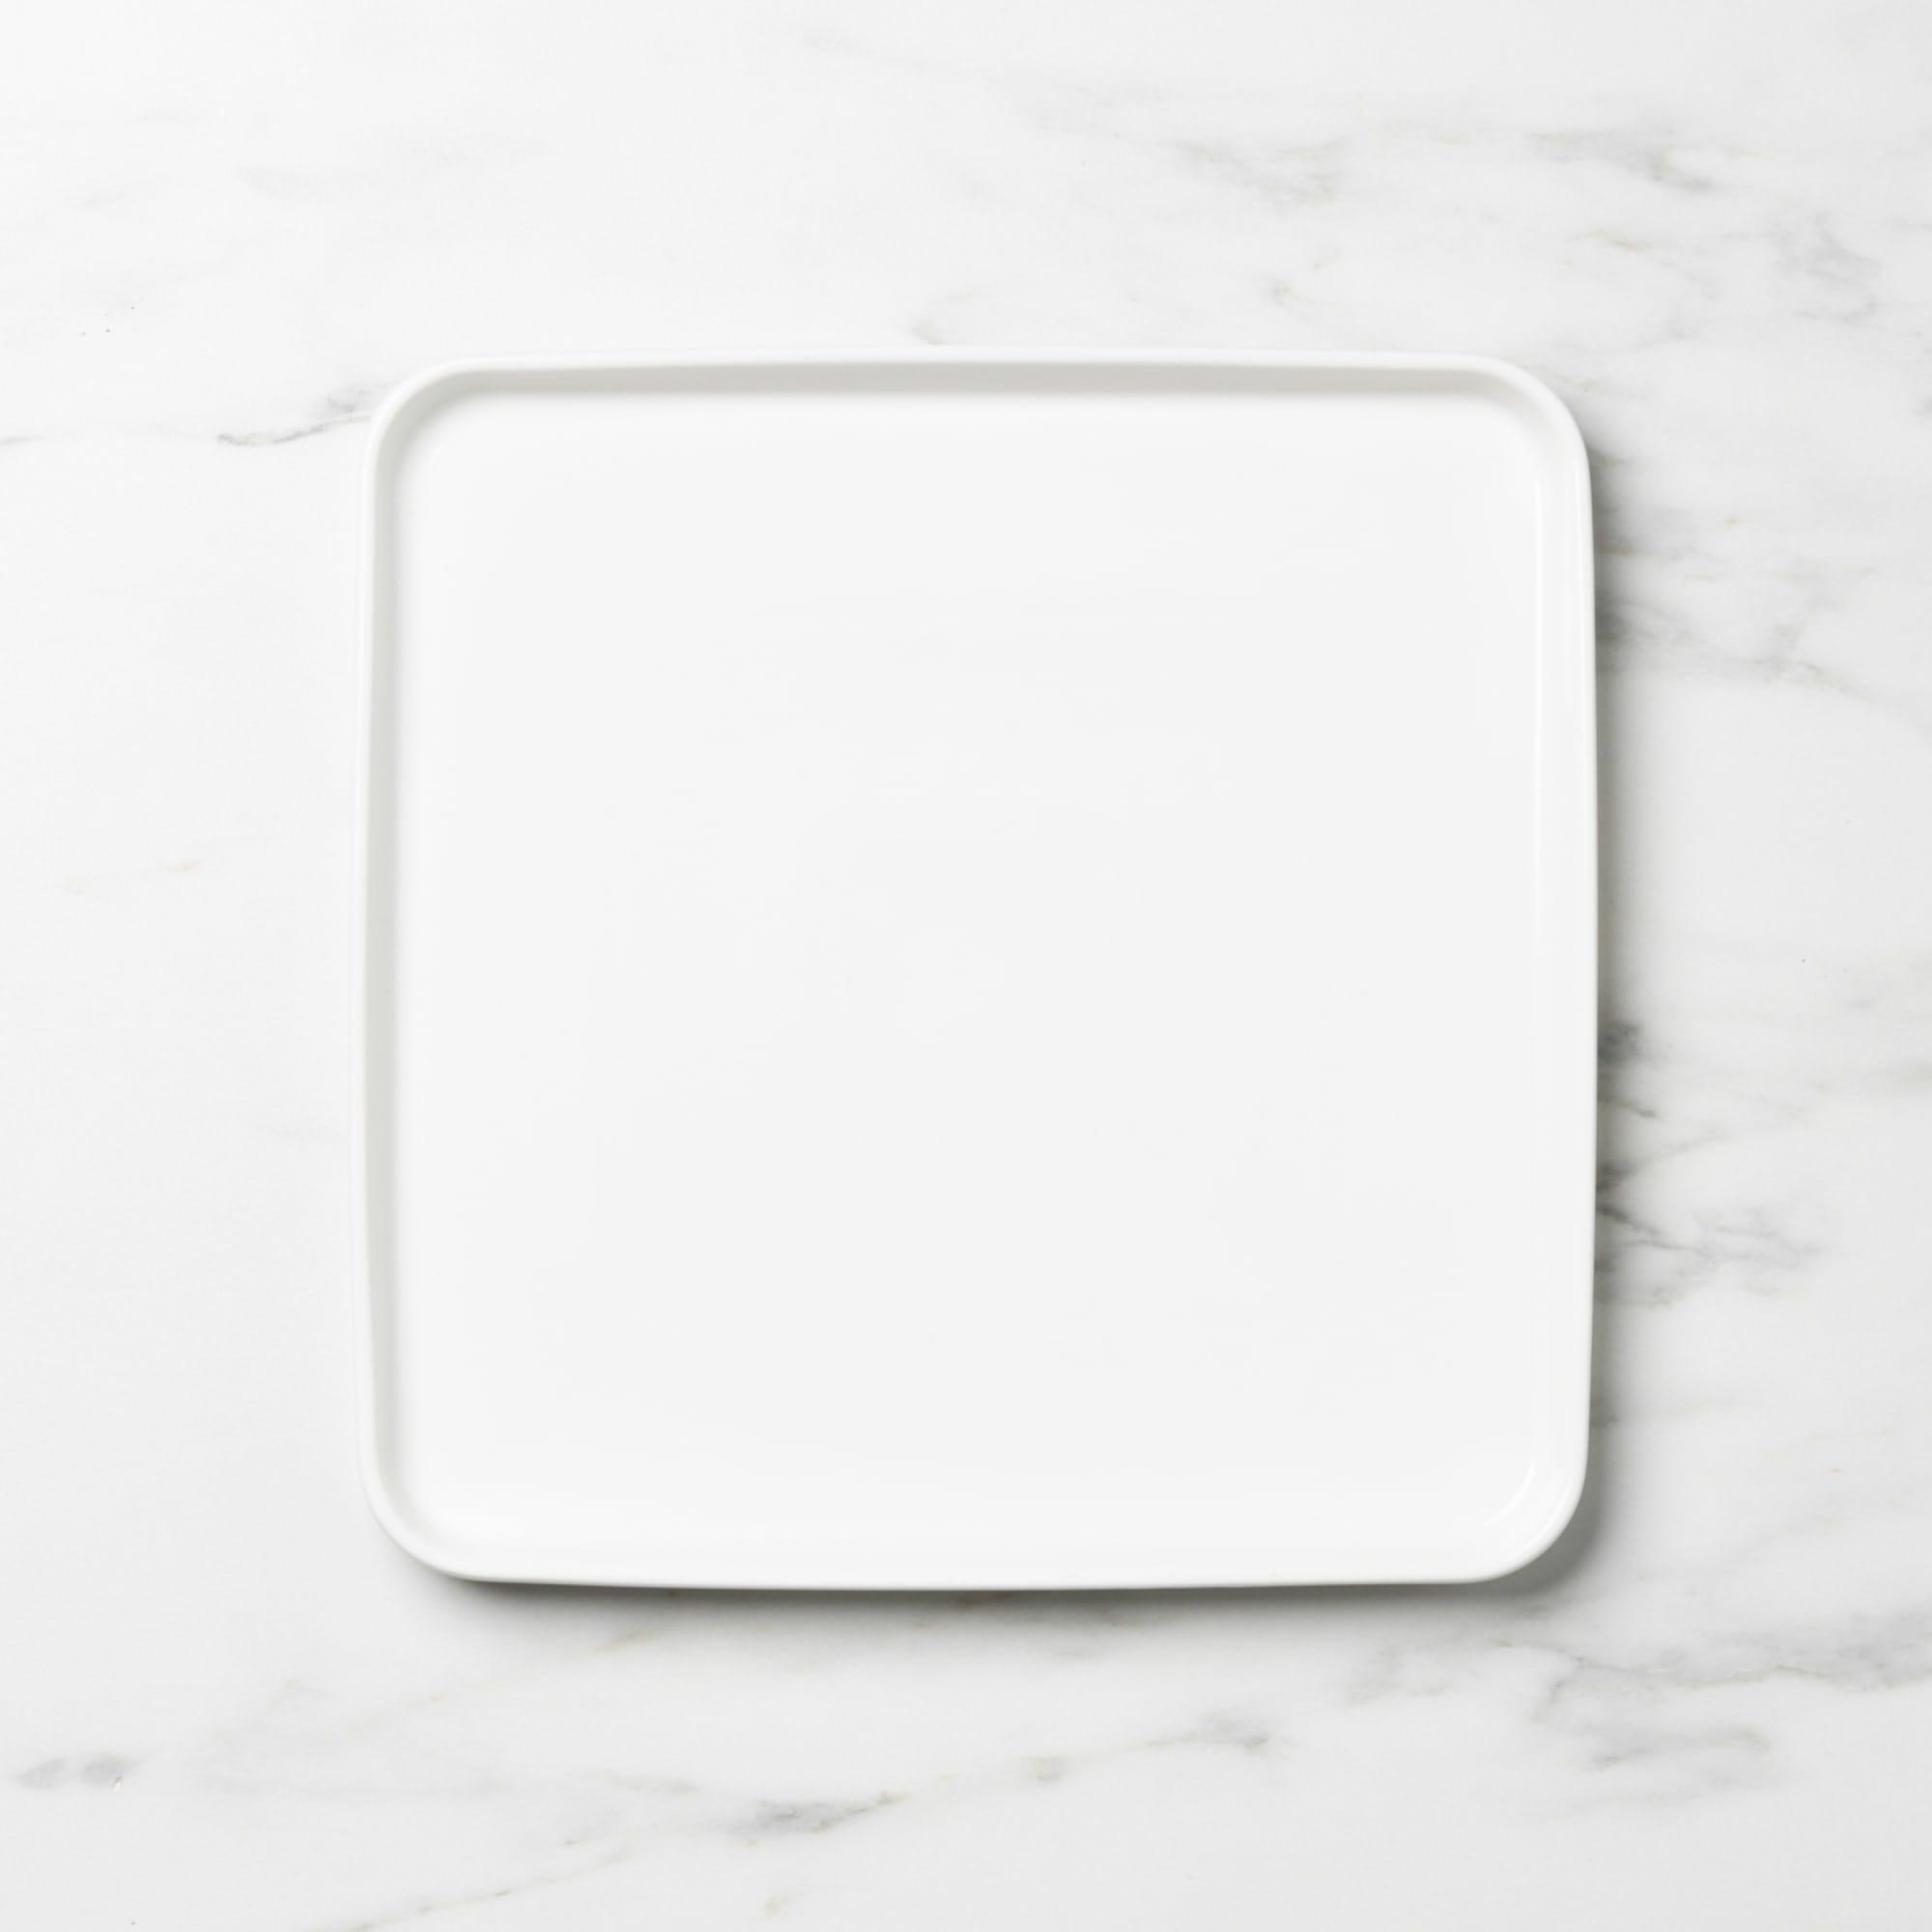 Salisbury & Co Classic Square Platter 25.5cm White Image 1